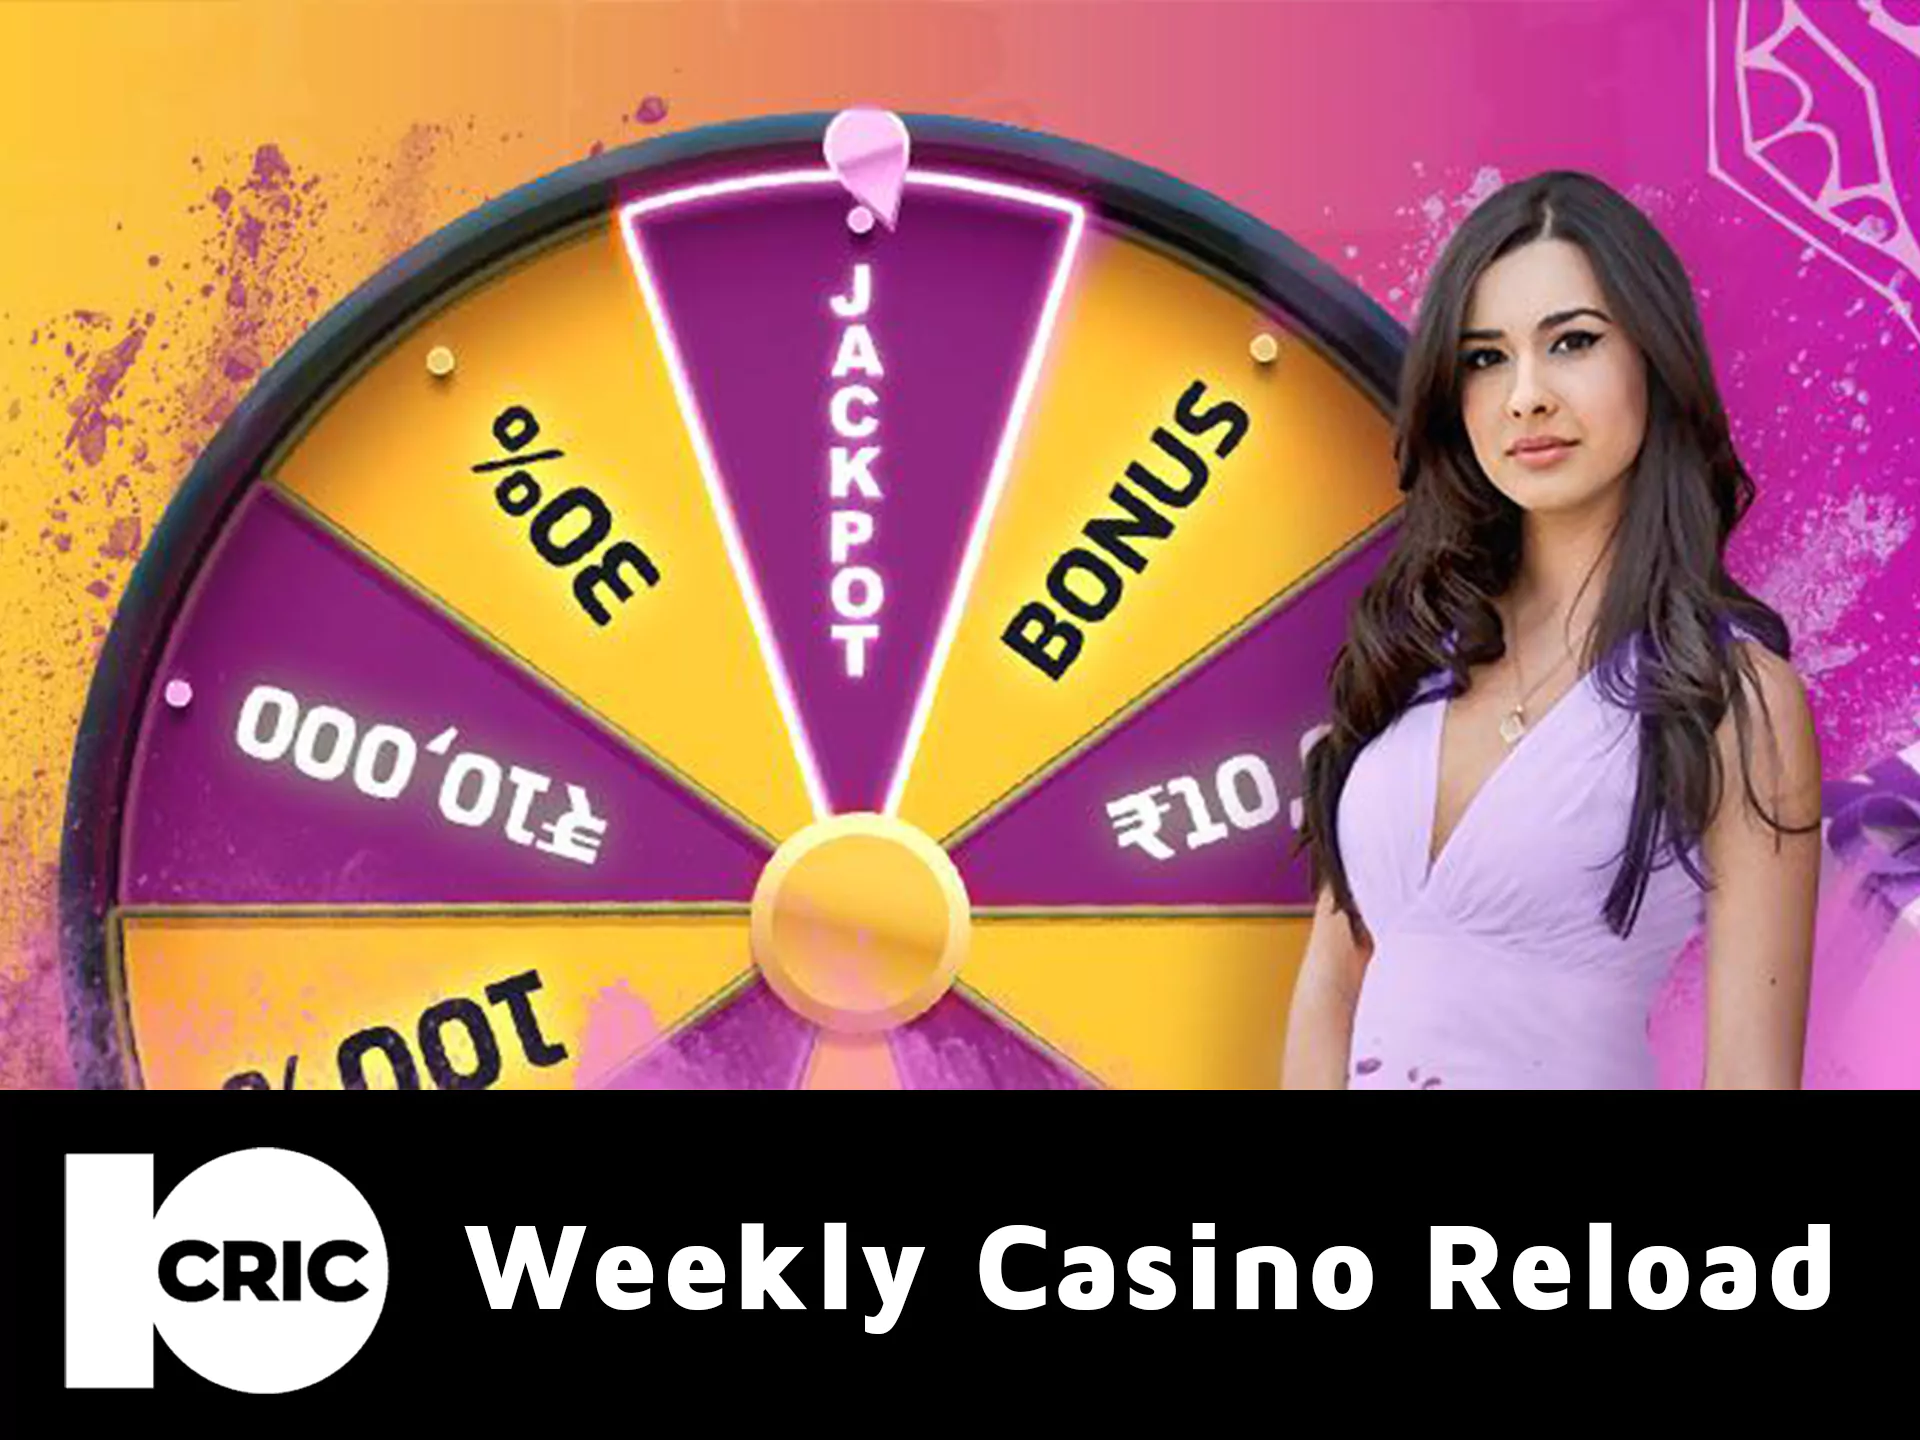 Claim your bonuses in casino every week.